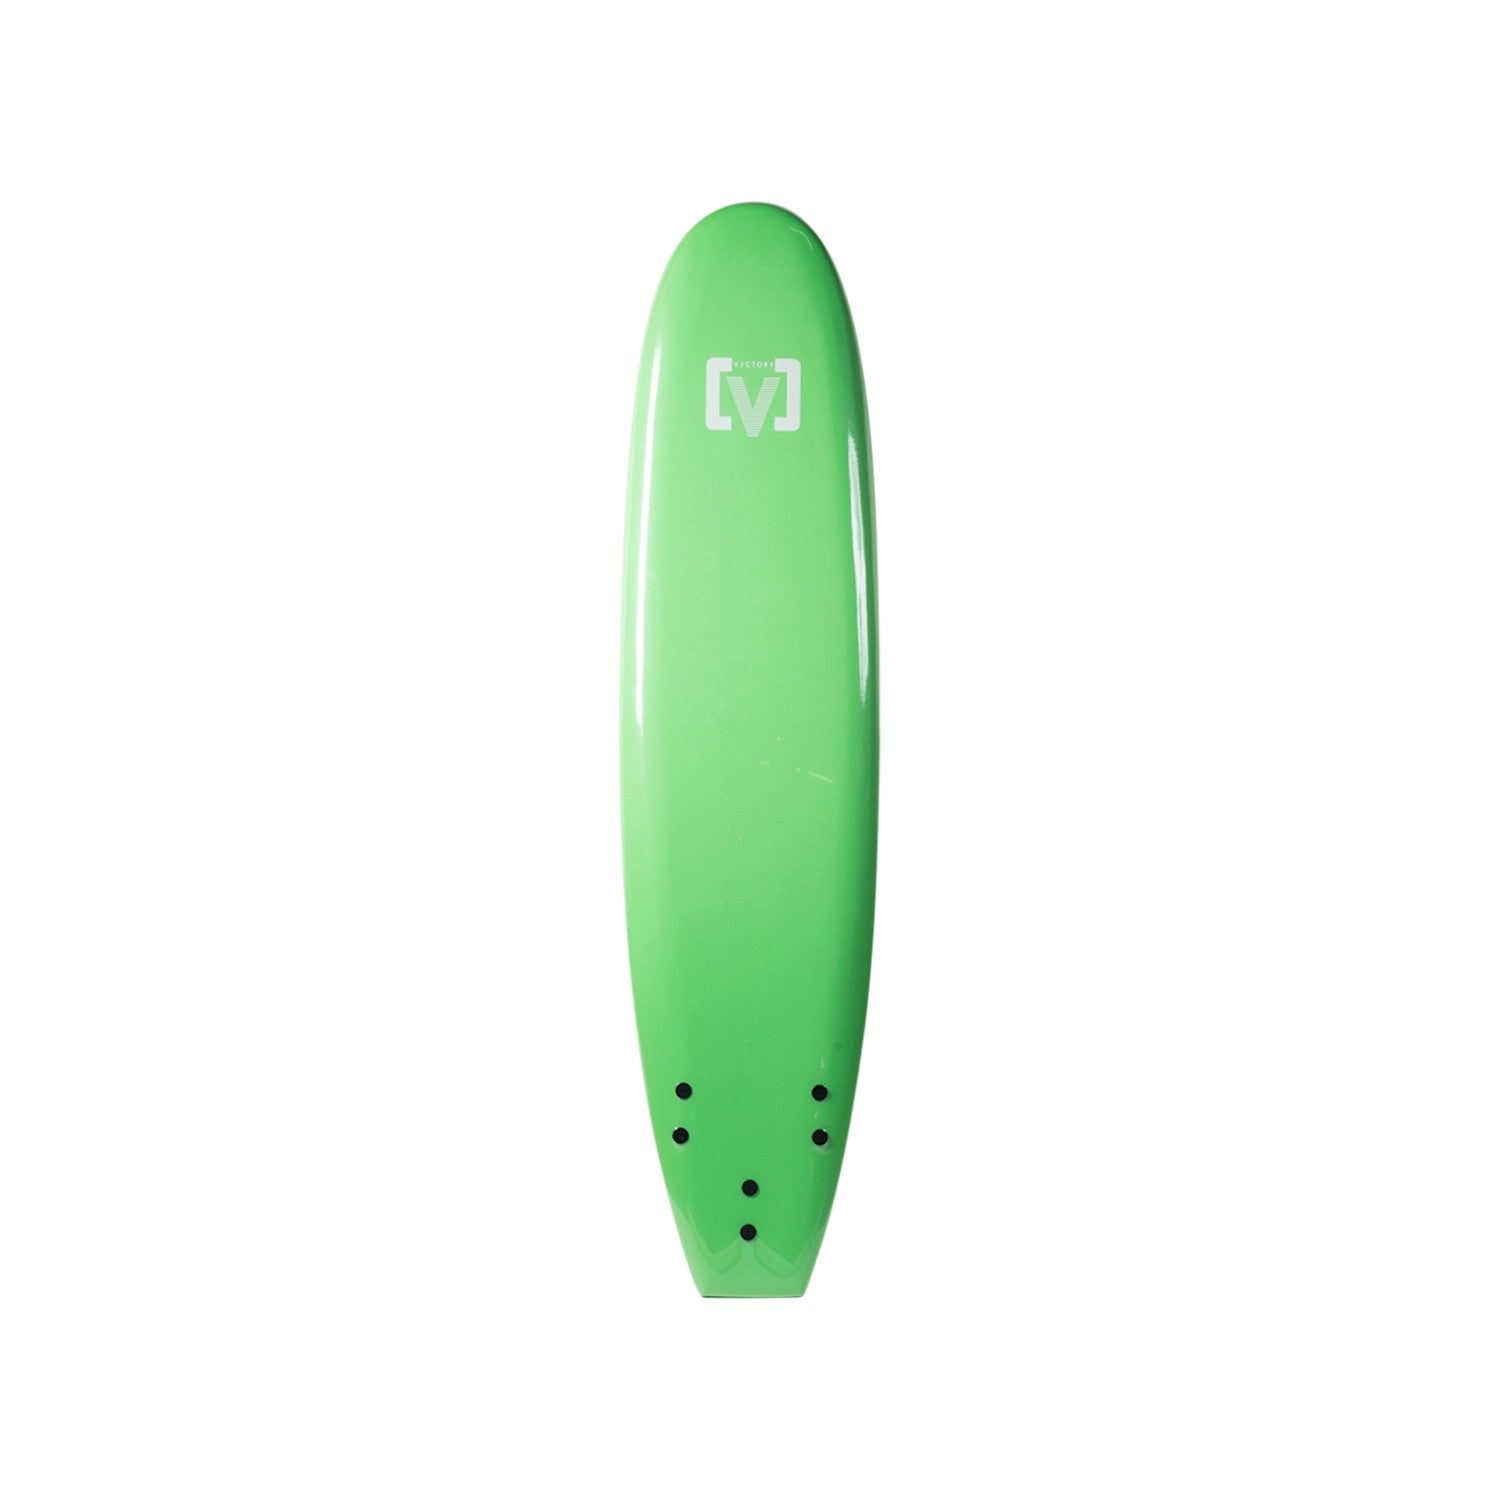 VICTORY - EPS Softboard - Foam Surfboard - Malibu 7'6 - Green